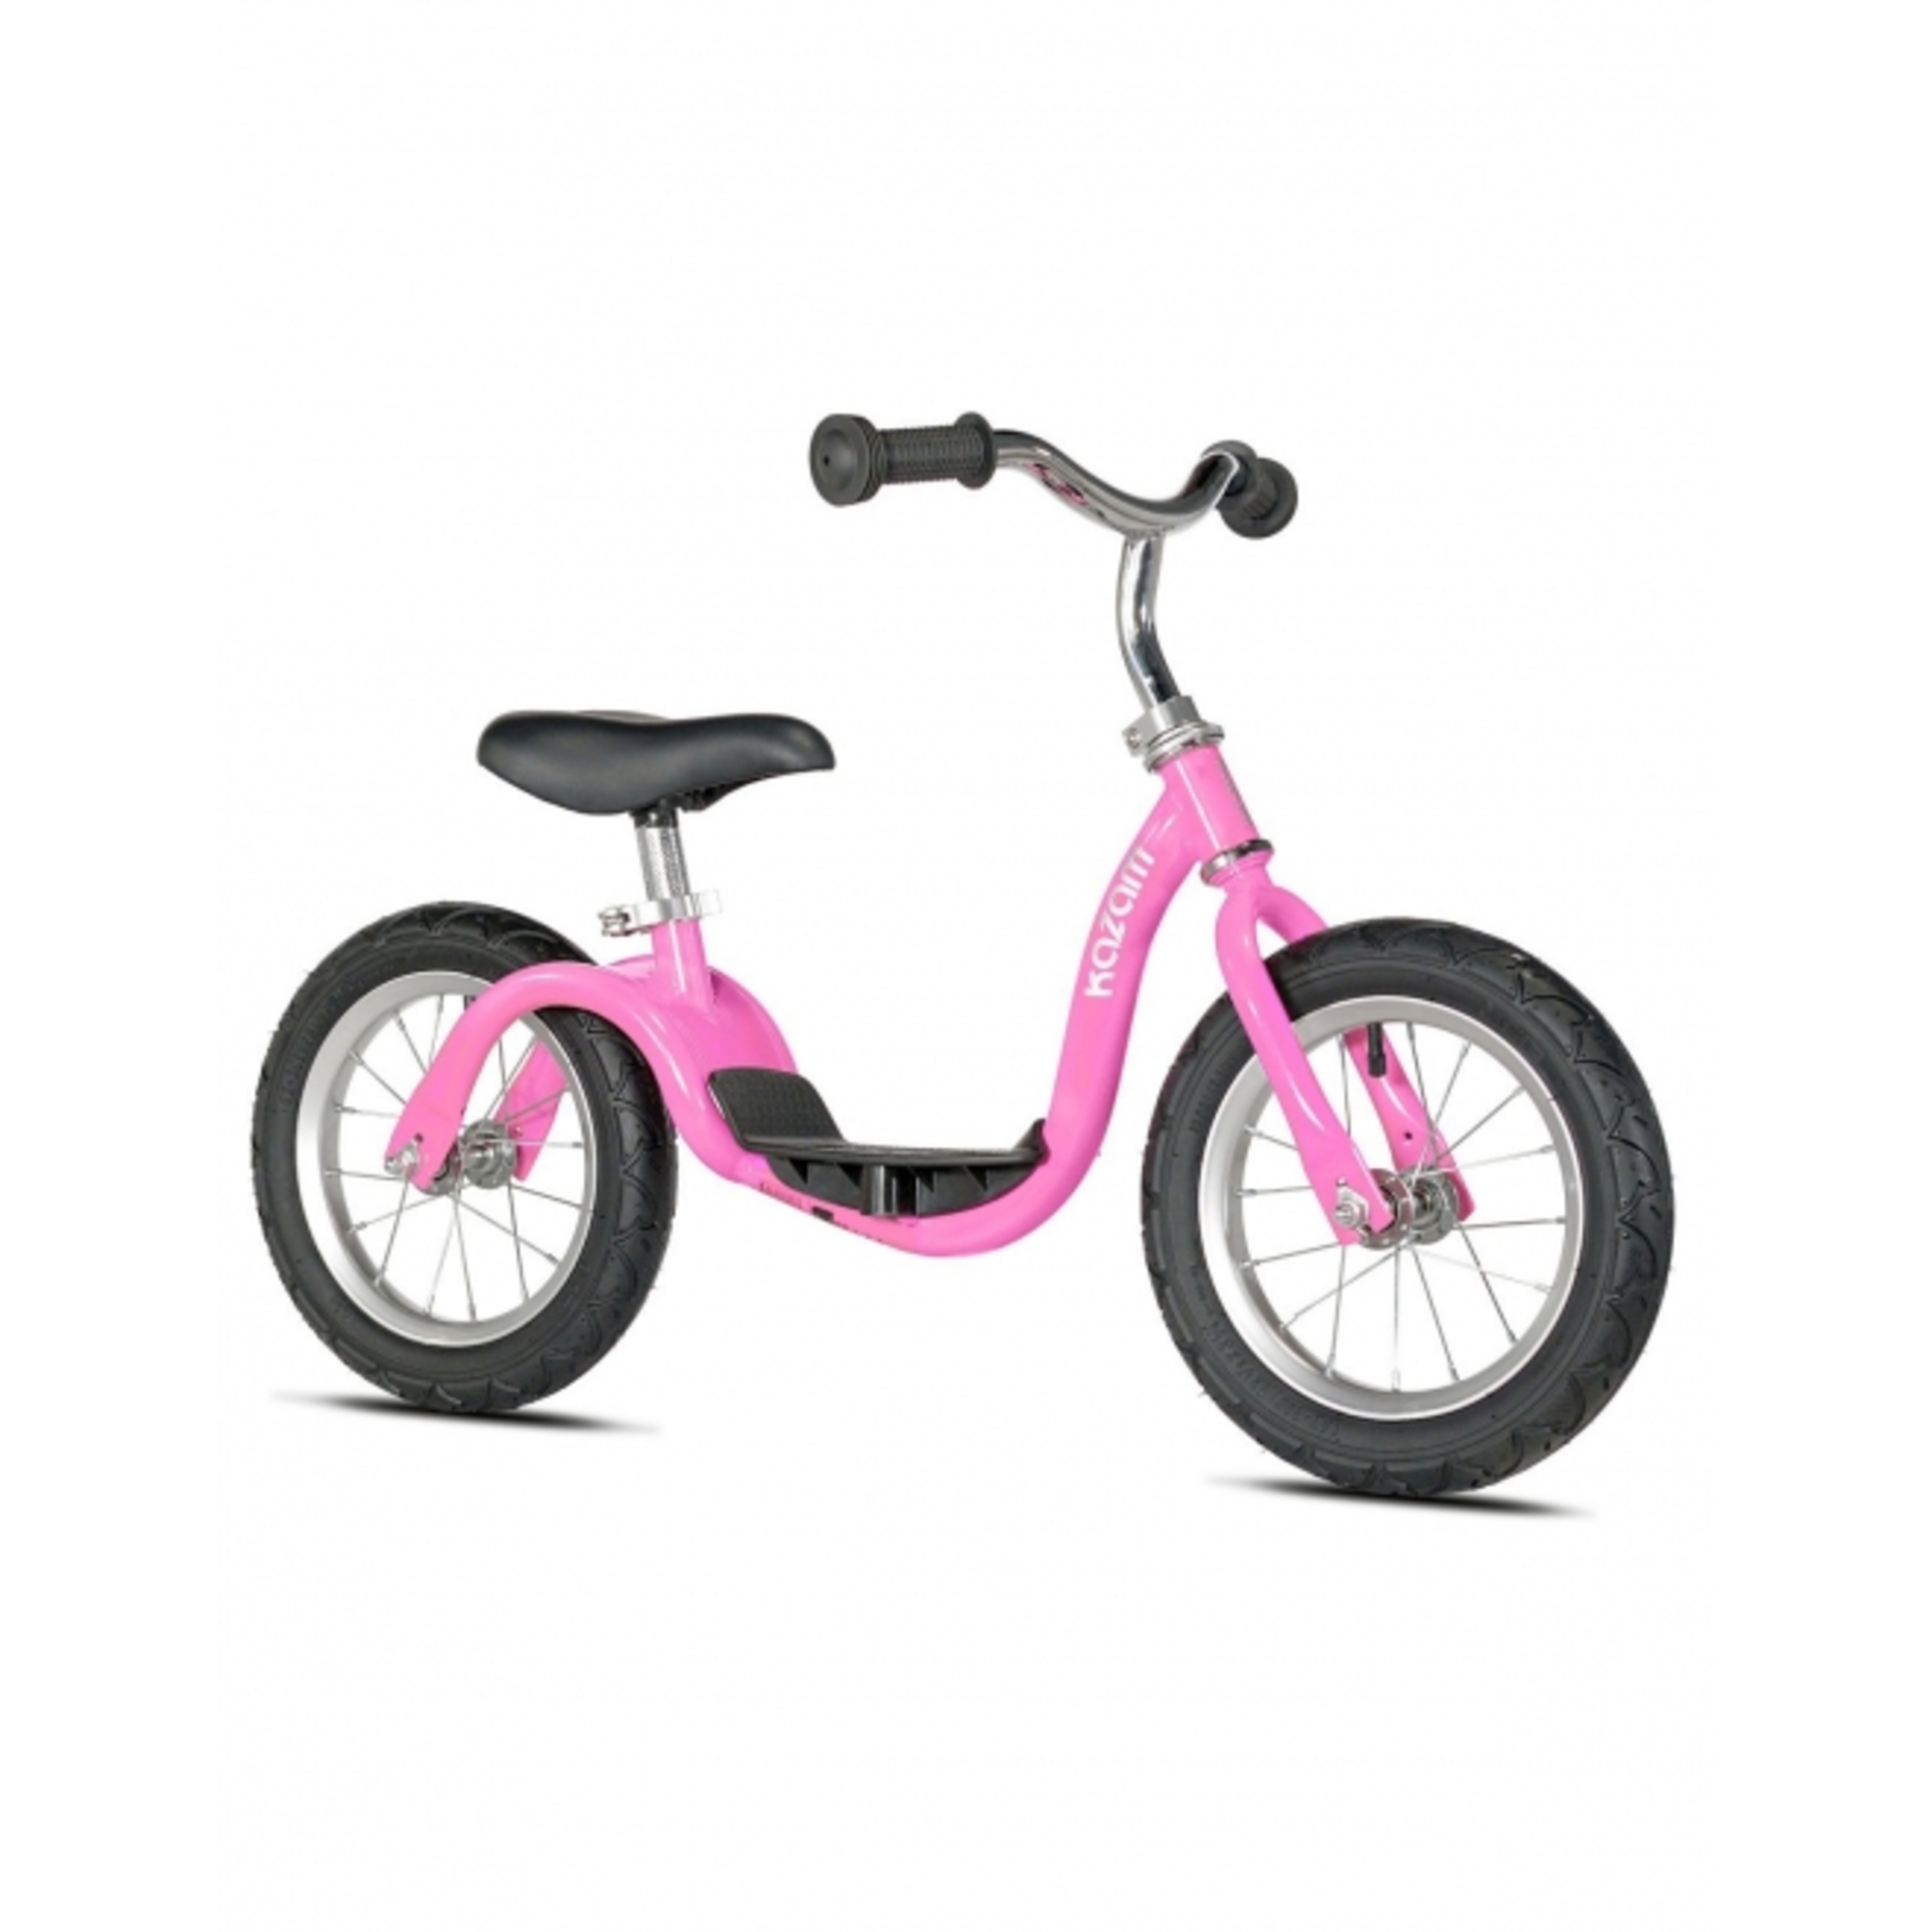 Bicicleta Niños Kazam Neo Rosa - rosa - 